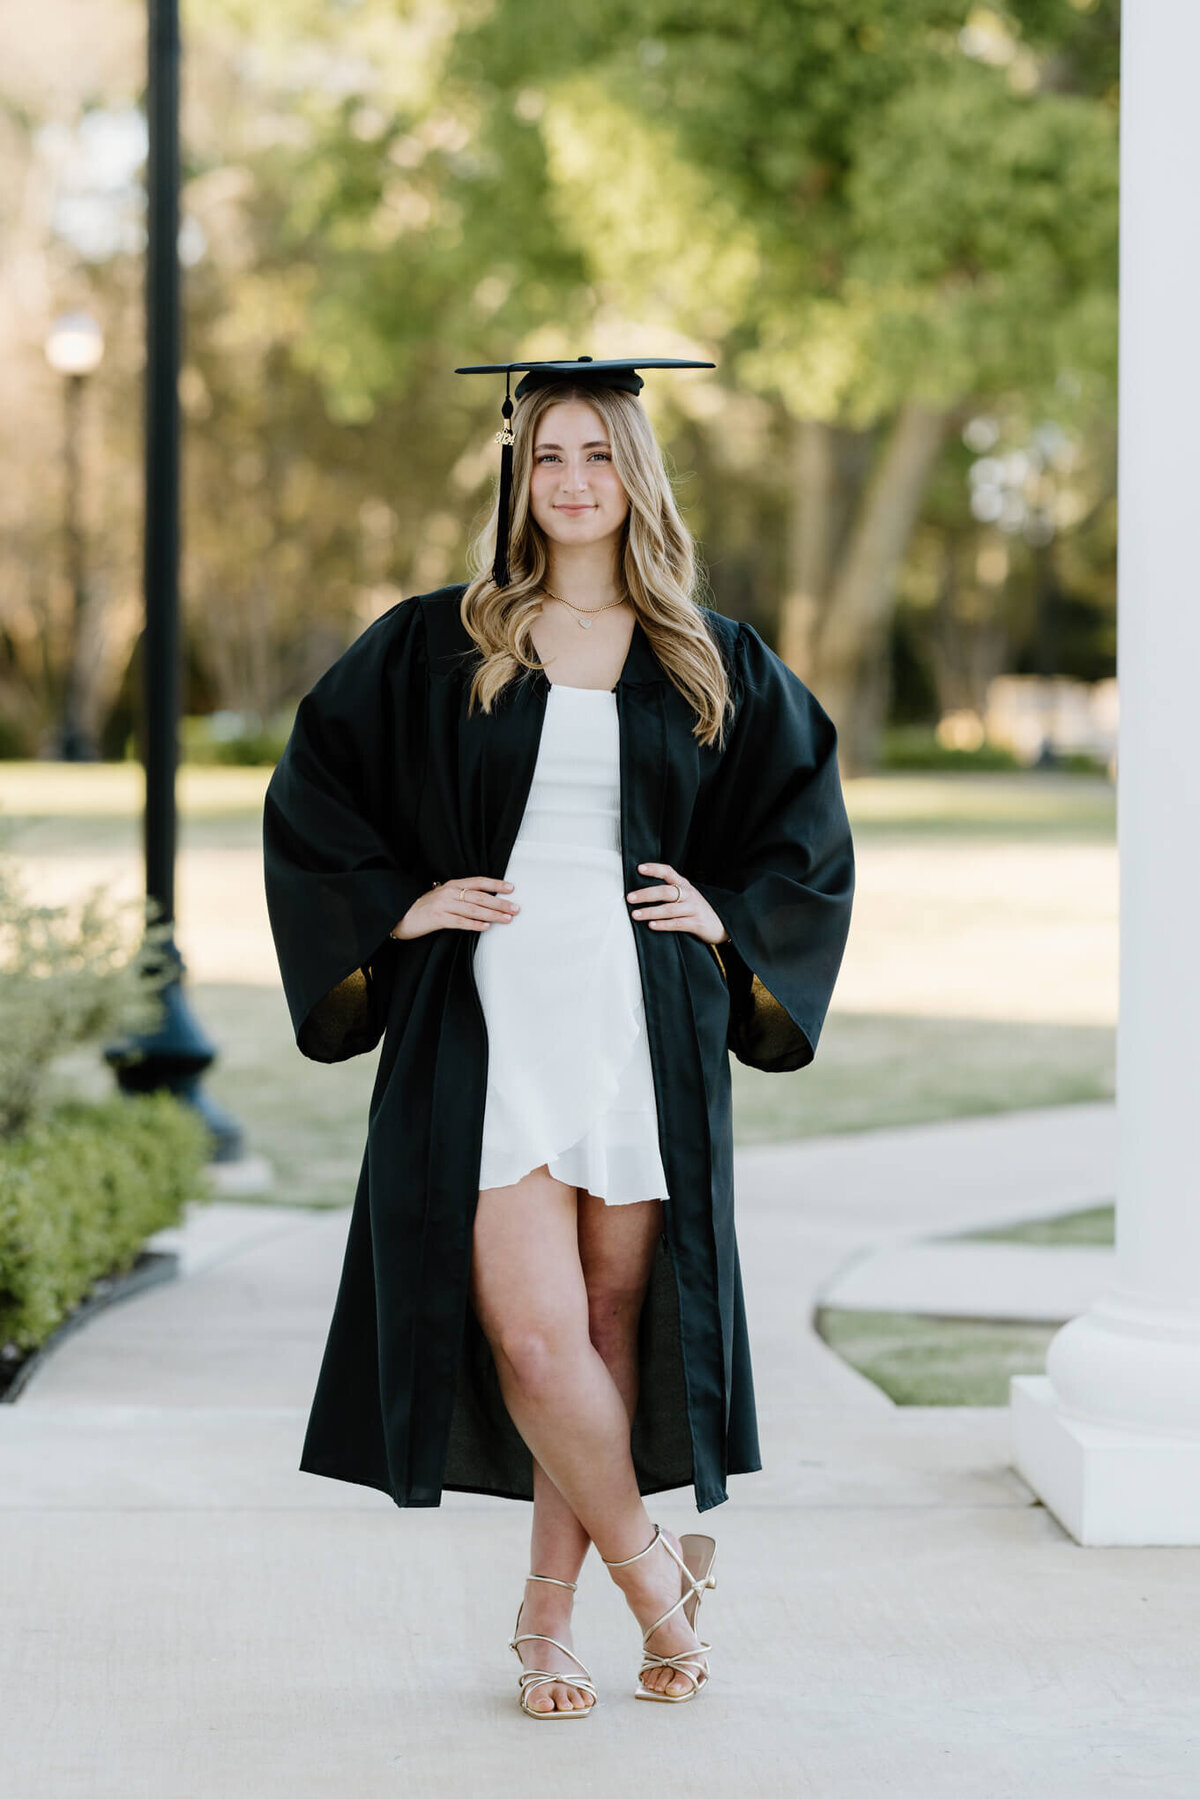 ETBU-Graduate-Photos-Marshall-Texas-Photographer-32